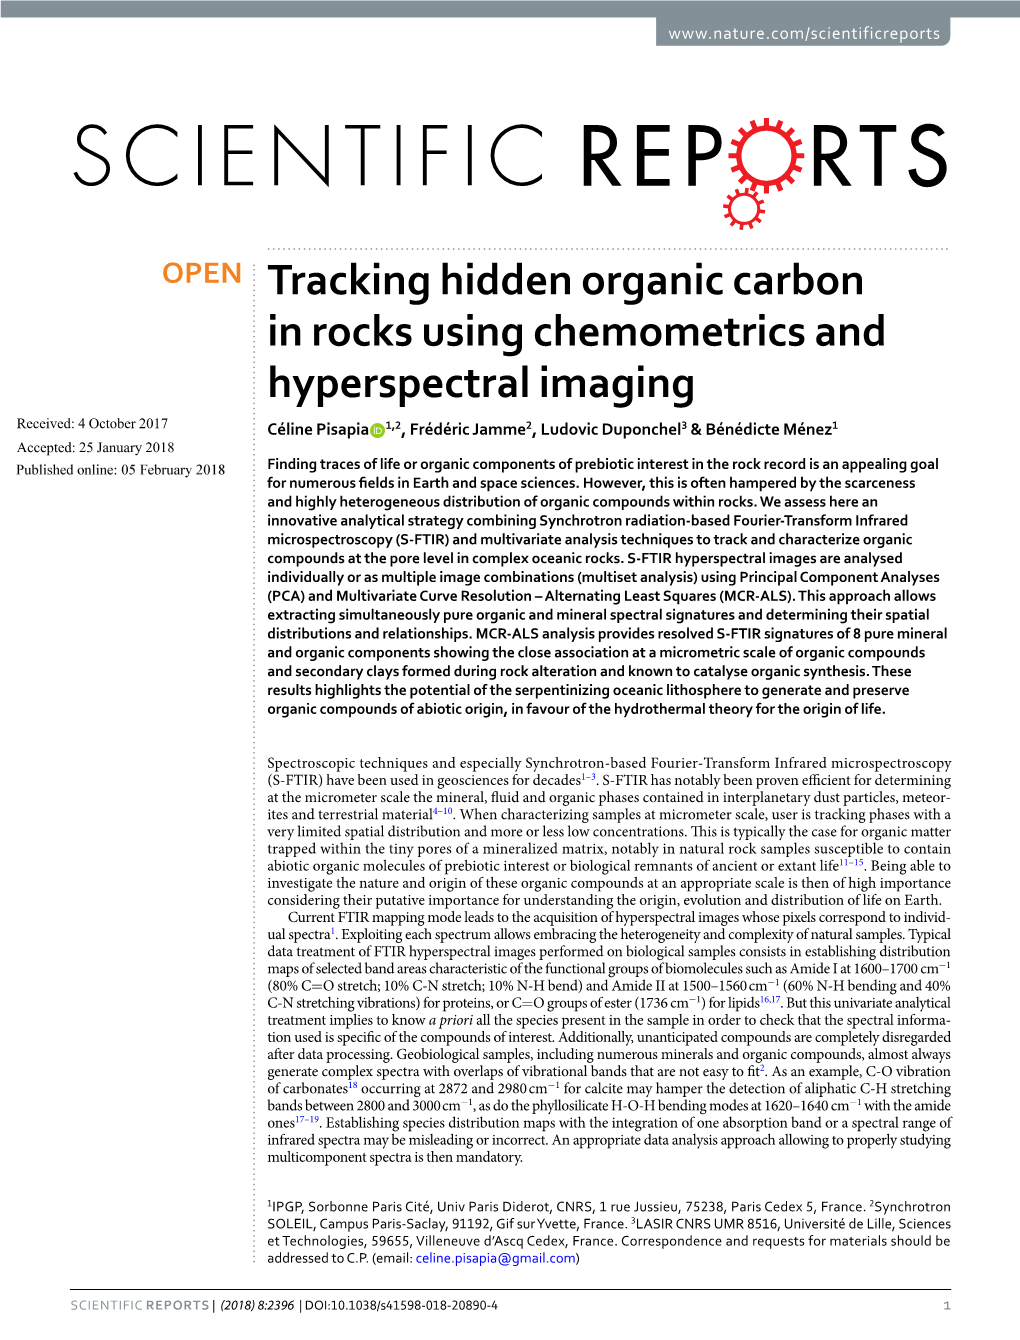 Tracking Hidden Organic Carbon in Rocks Using Chemometrics And